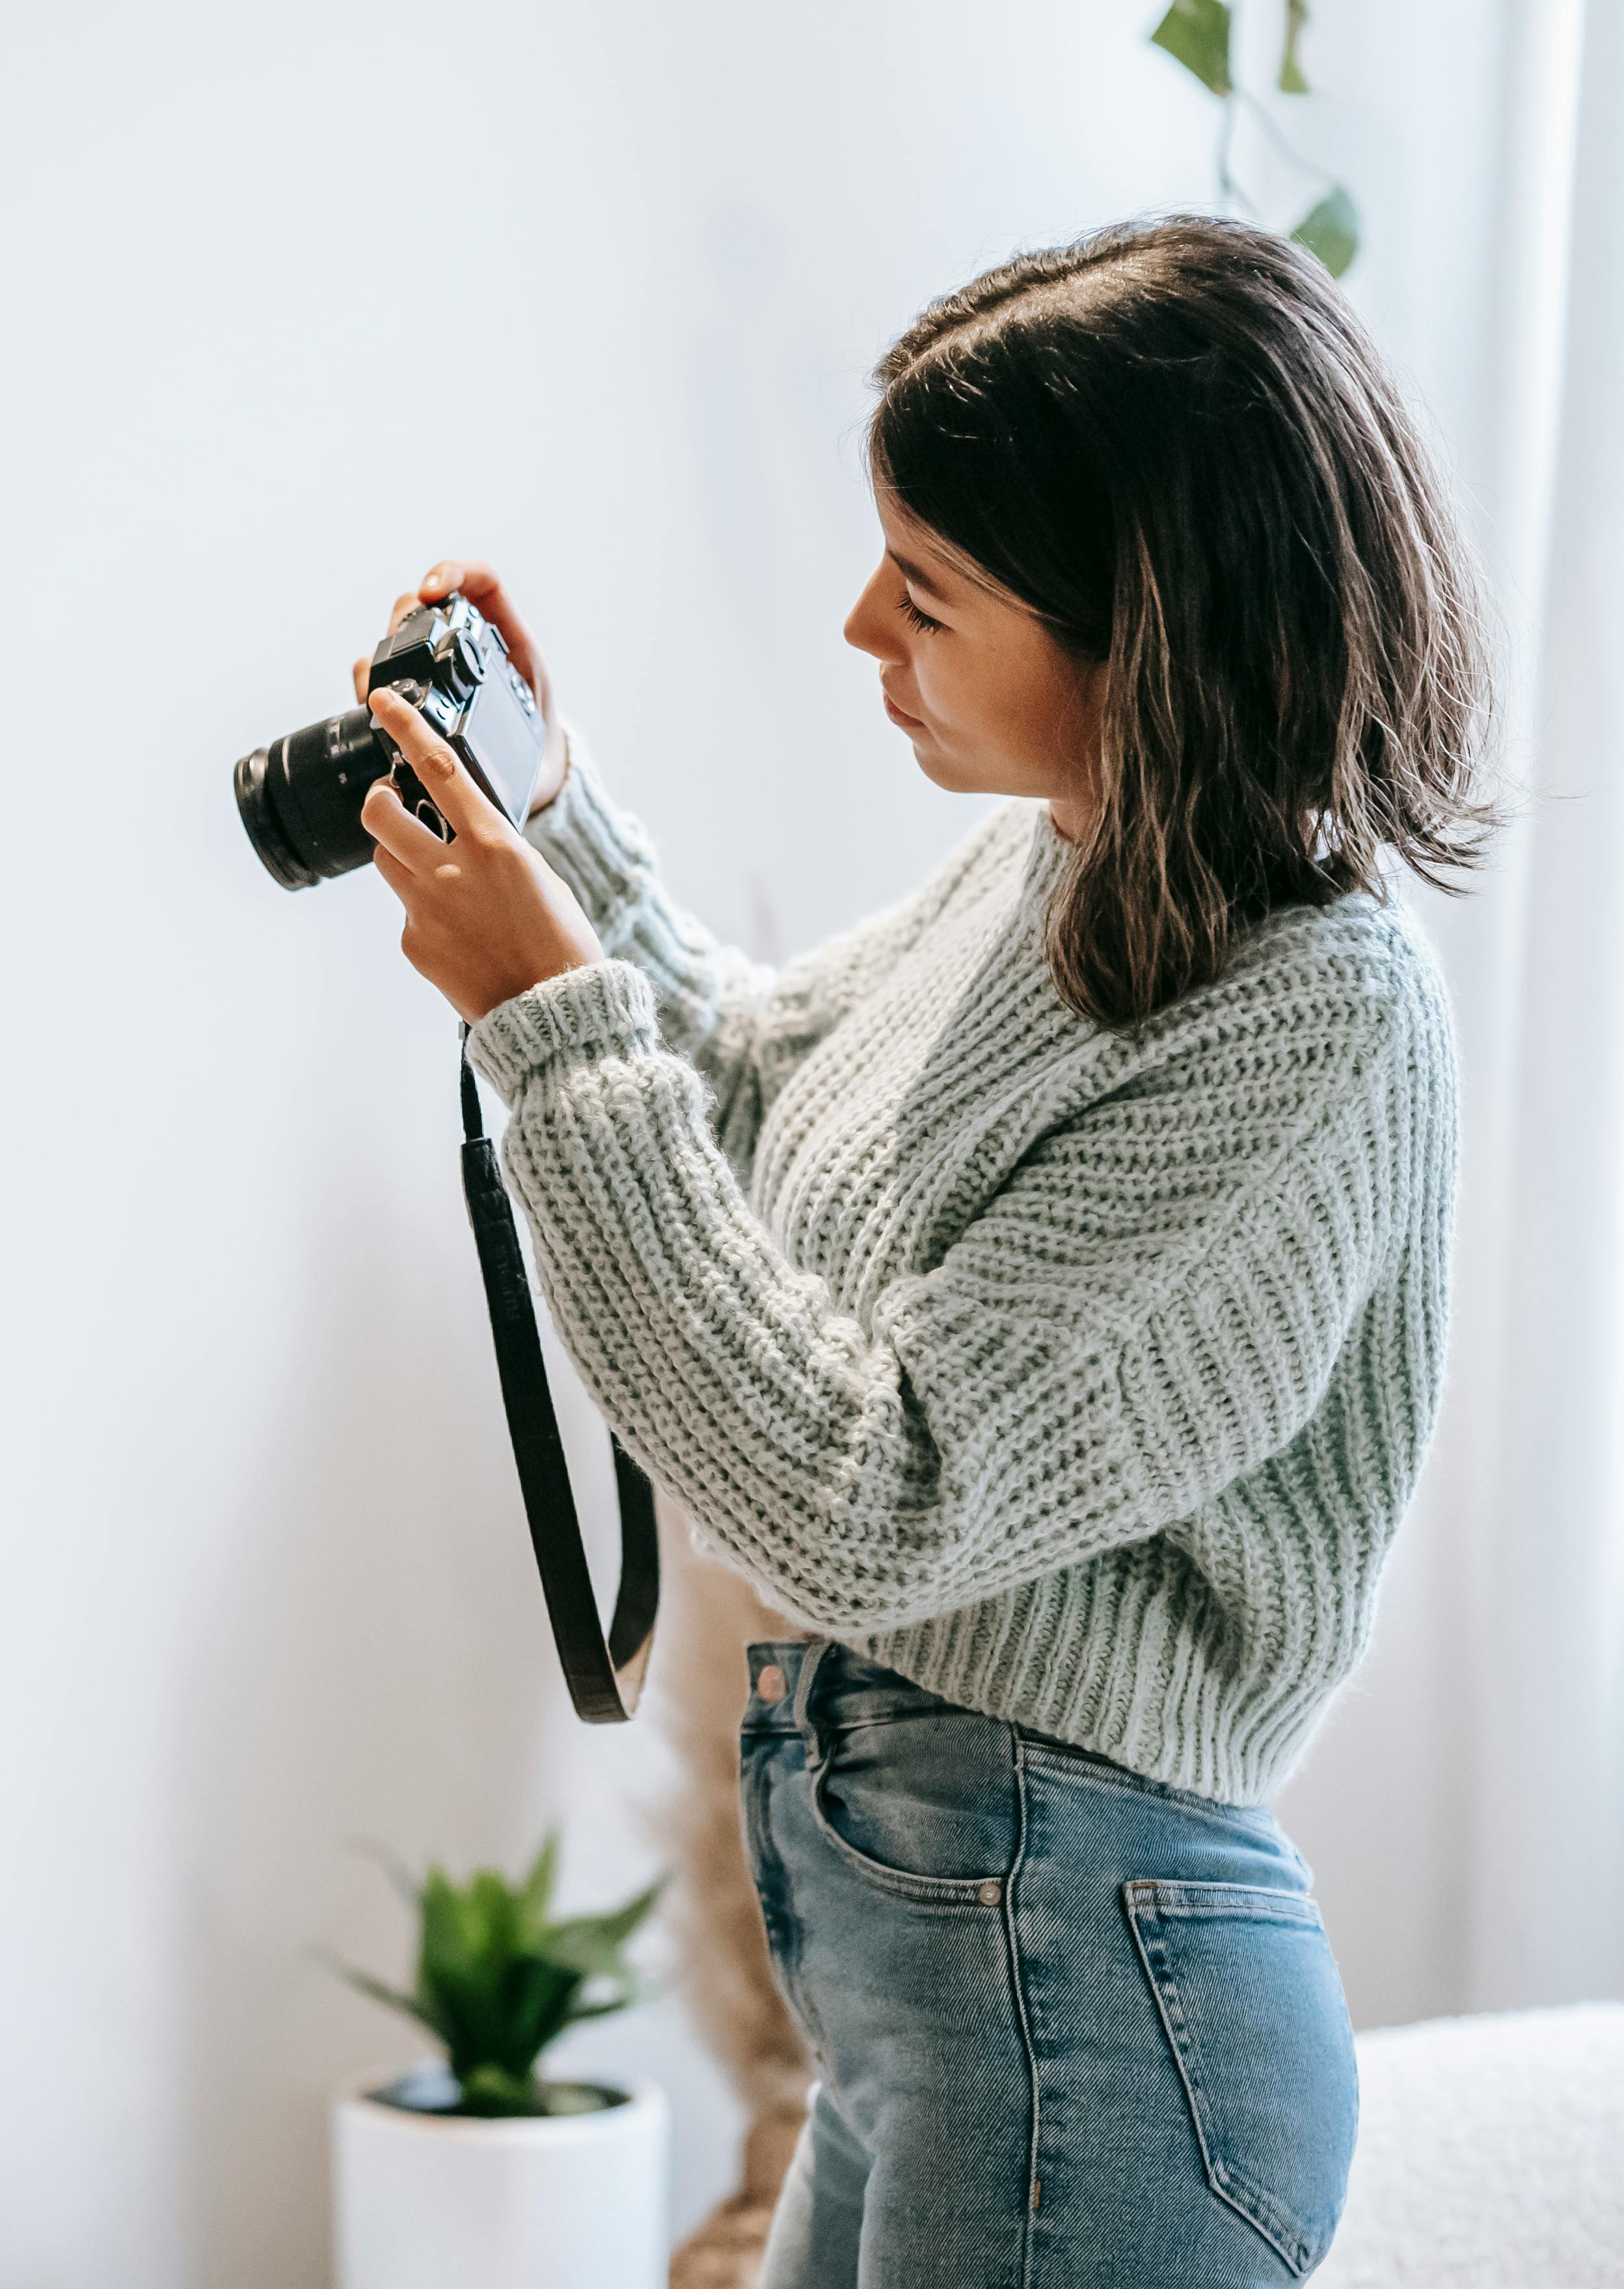 young woman checking modern photo camera